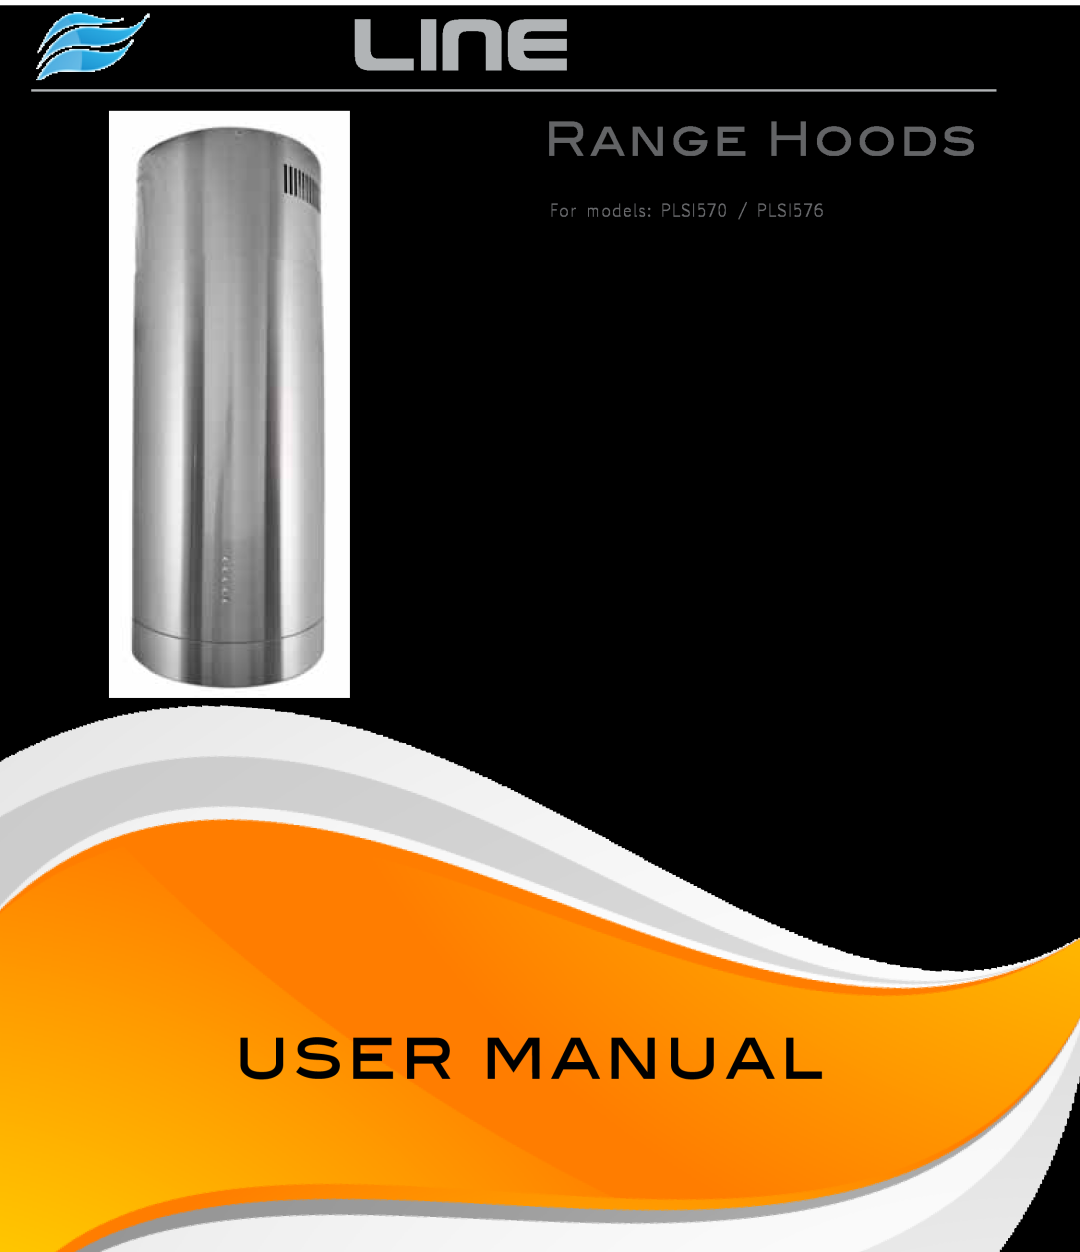 Proline PLS1570, PLS1576 user manual Proline, Range Hoods, For models PLSI570 / PLSI576 